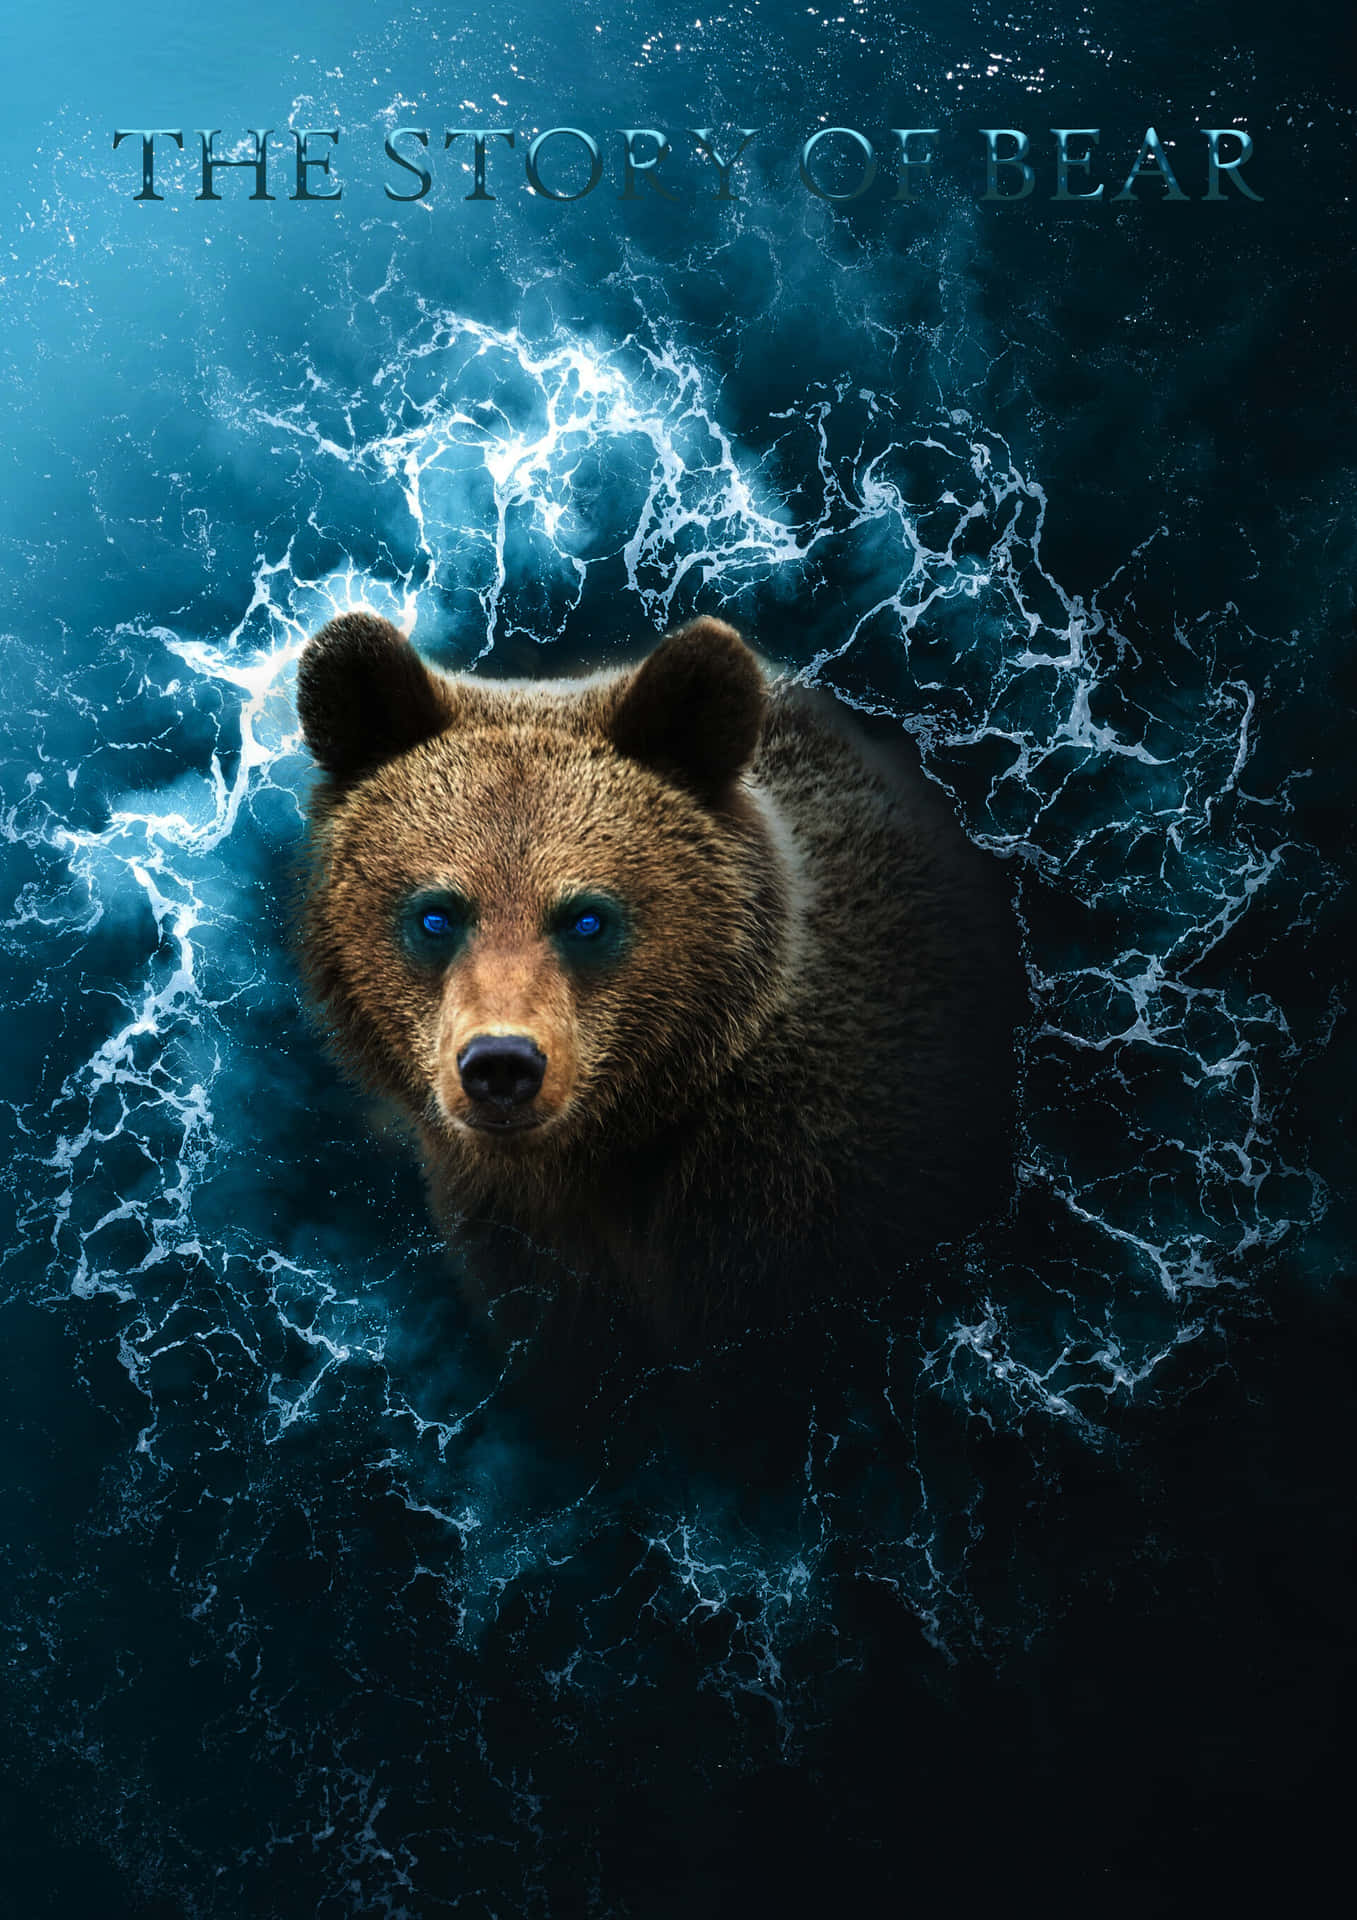 Cool Bear Story Poster Wallpaper